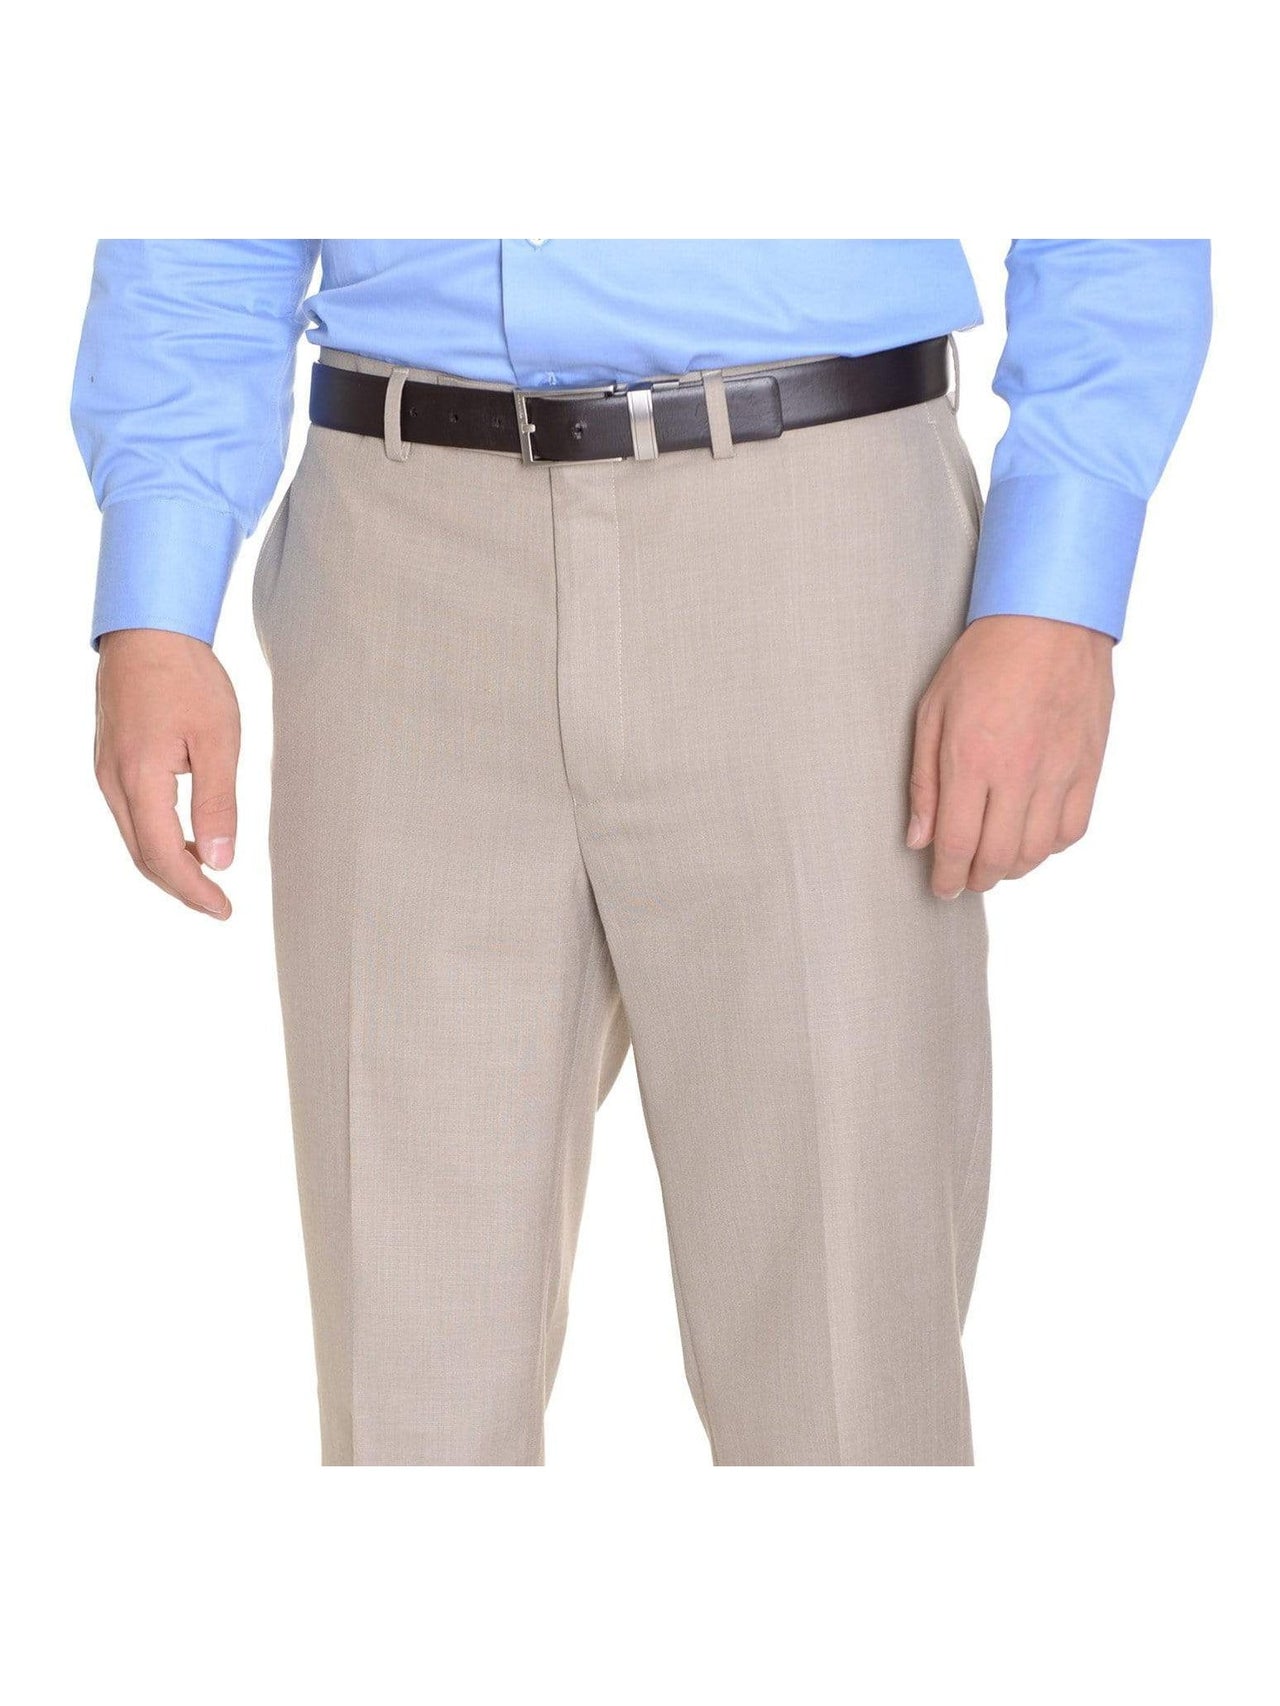 Calvin Klein Sale Pants 30X30 Men's Calvin Klein Body Slim Fit Tan Light Brown Flat Front Washable Dress Pants